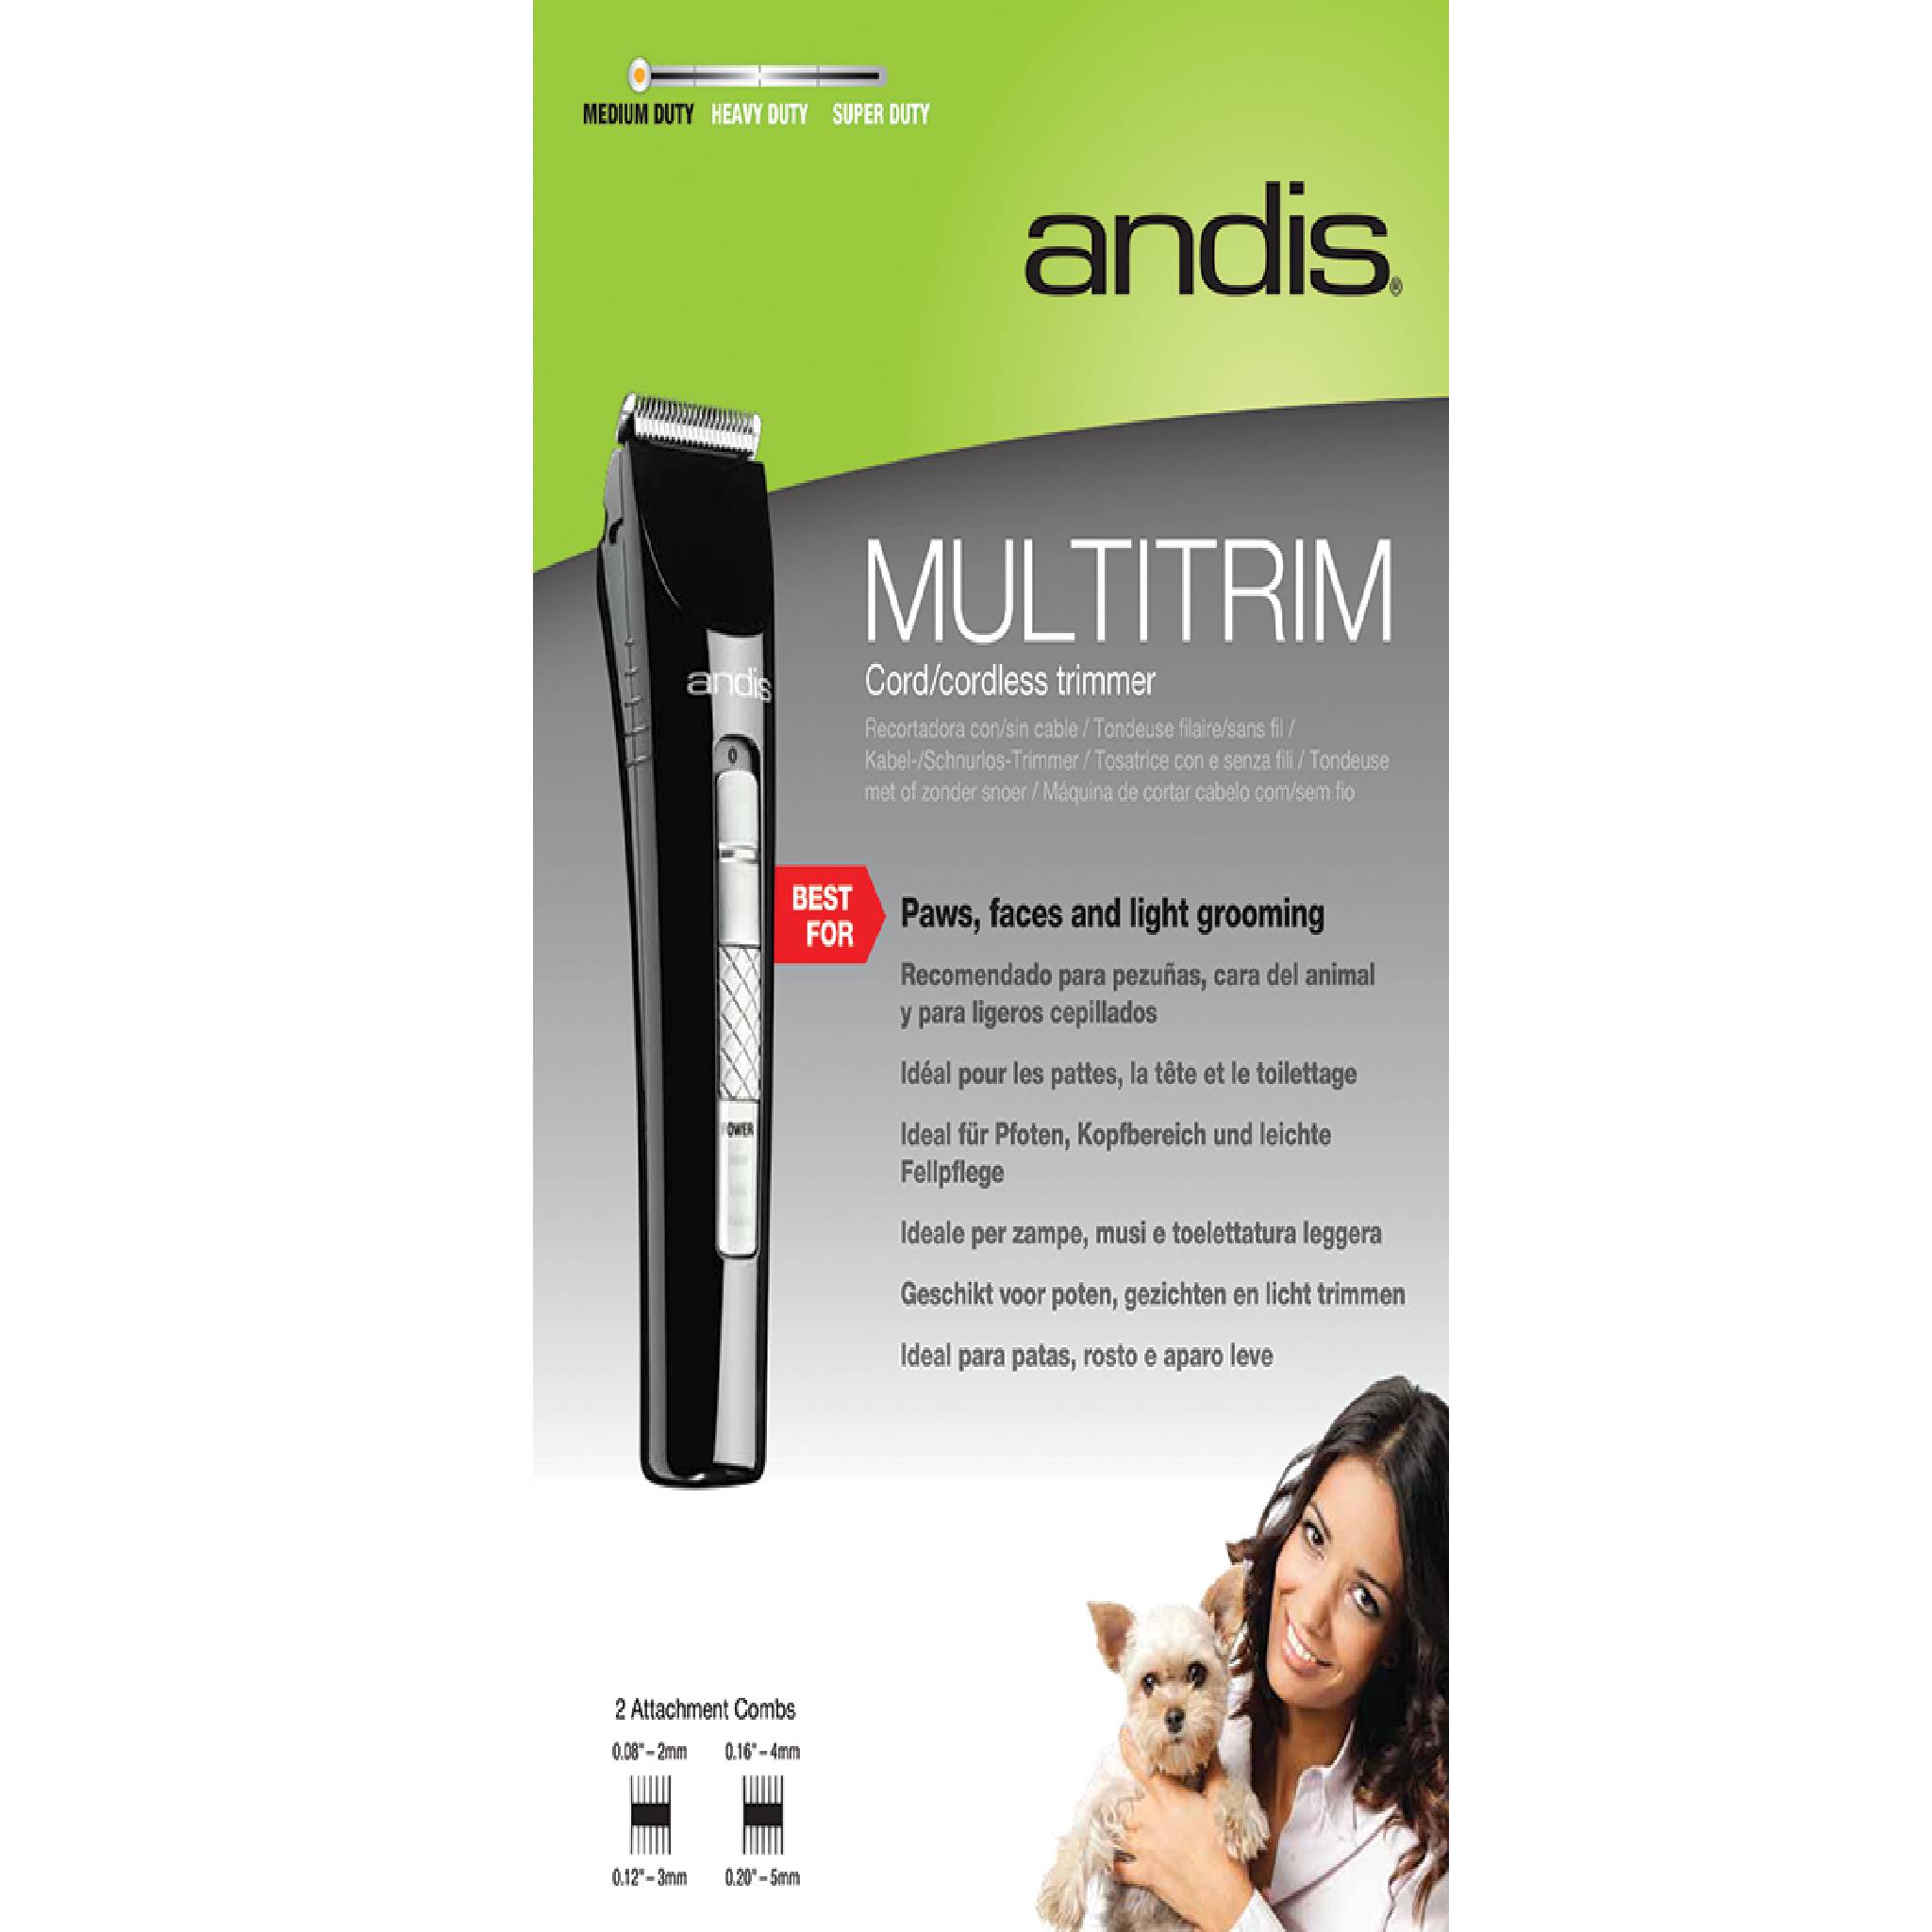 Andis CLT MultiTrim Cord/Cordless Trimmer, Black